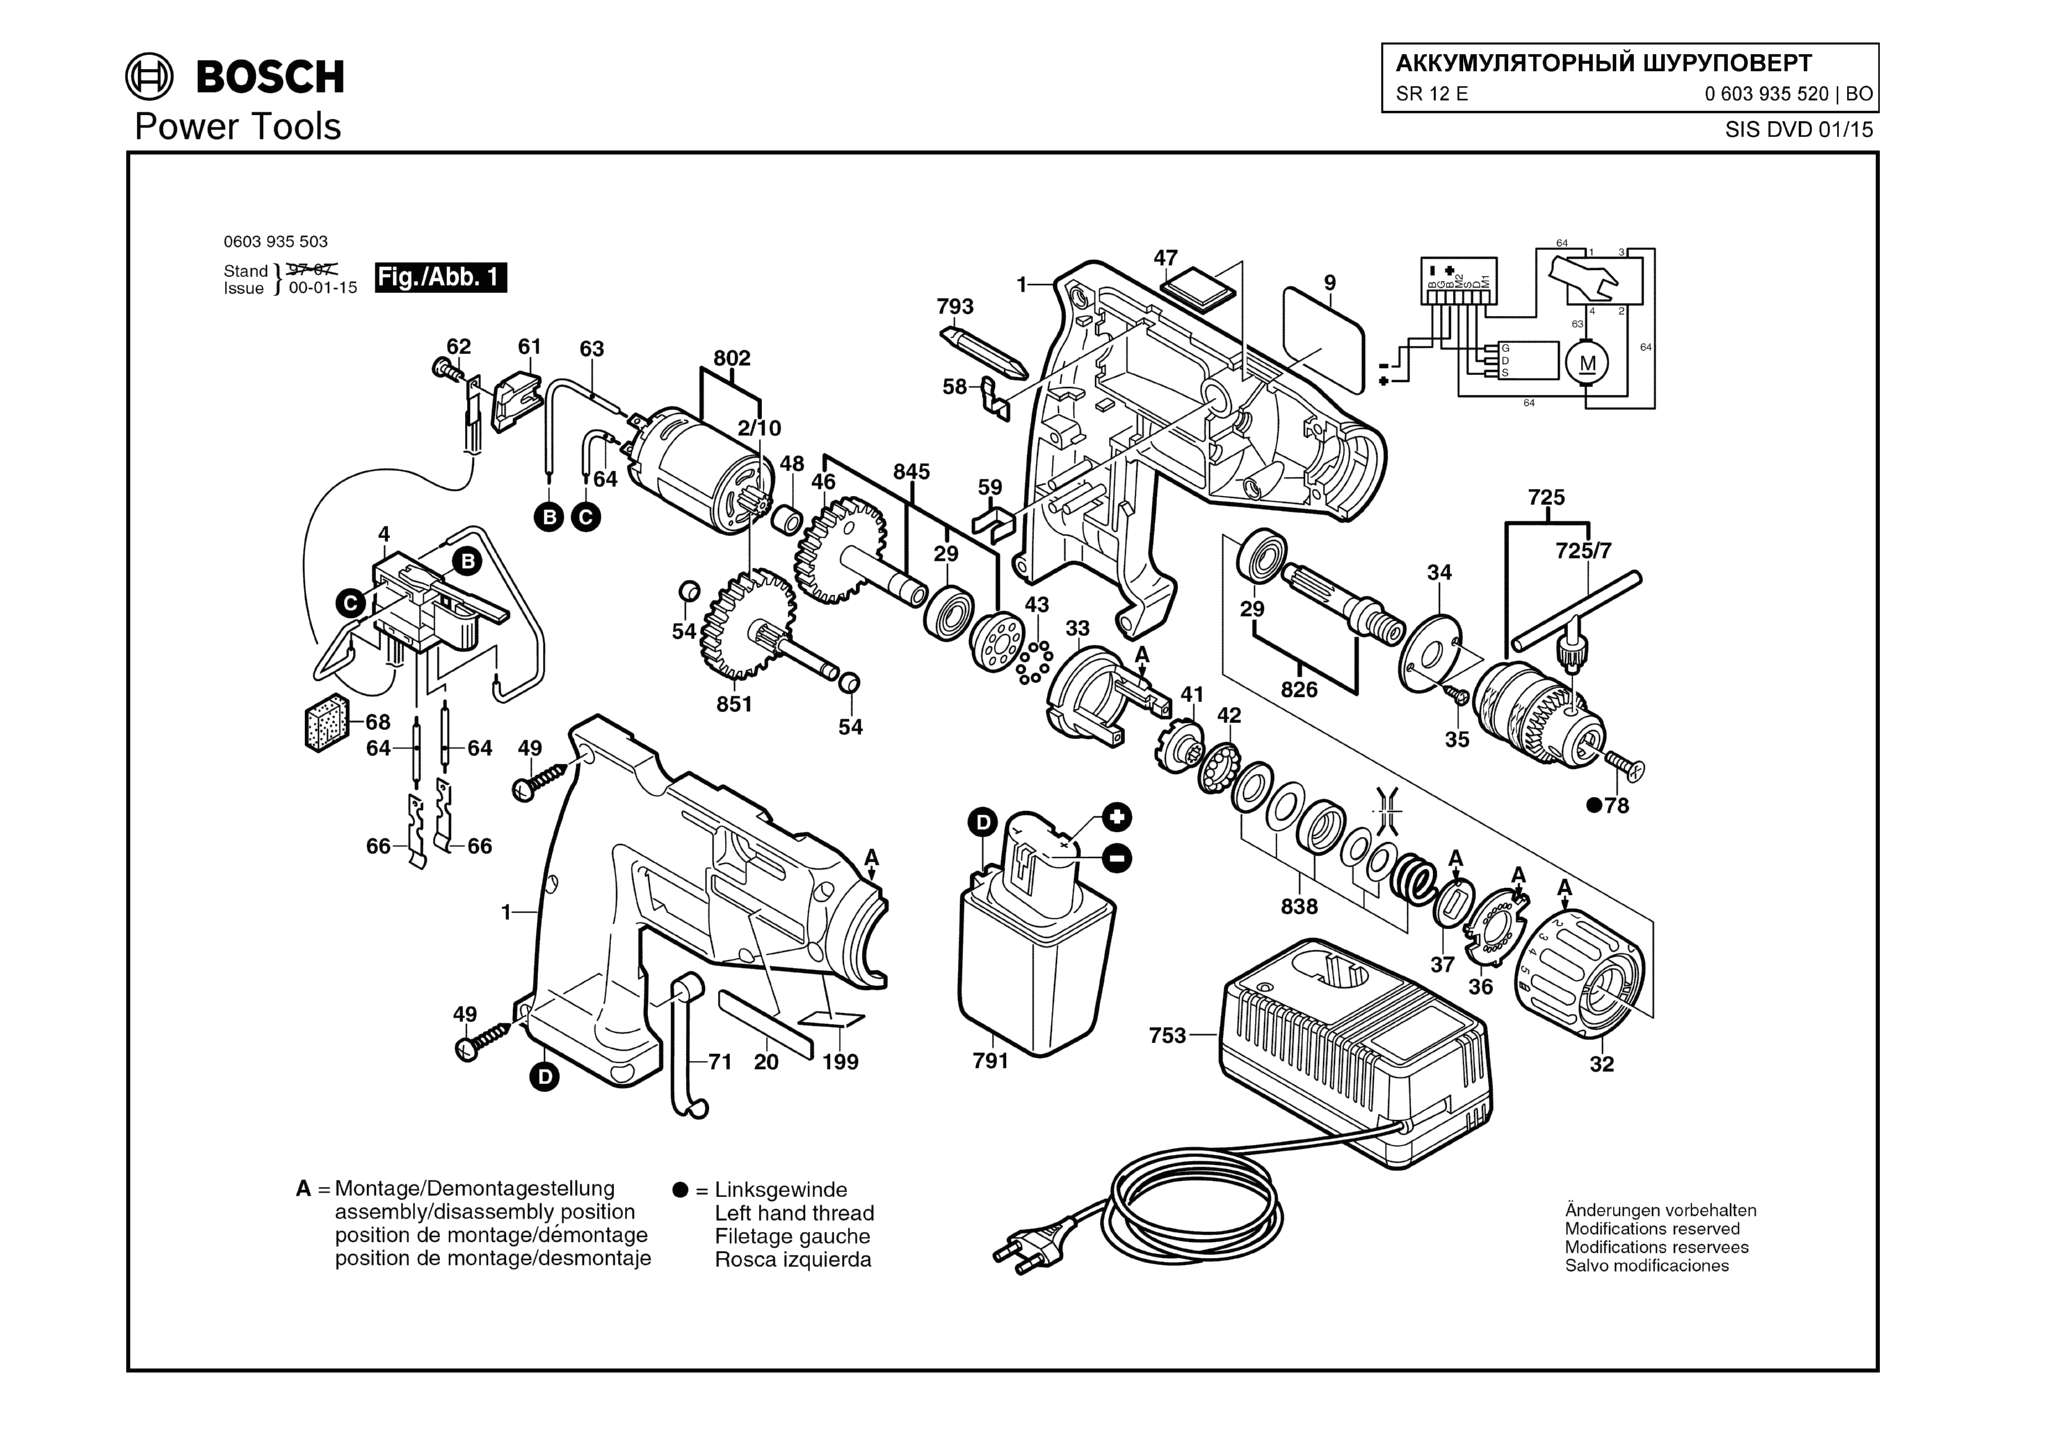 Запчасти, схема и деталировка Bosch SR 12 E (ТИП 0603935520)